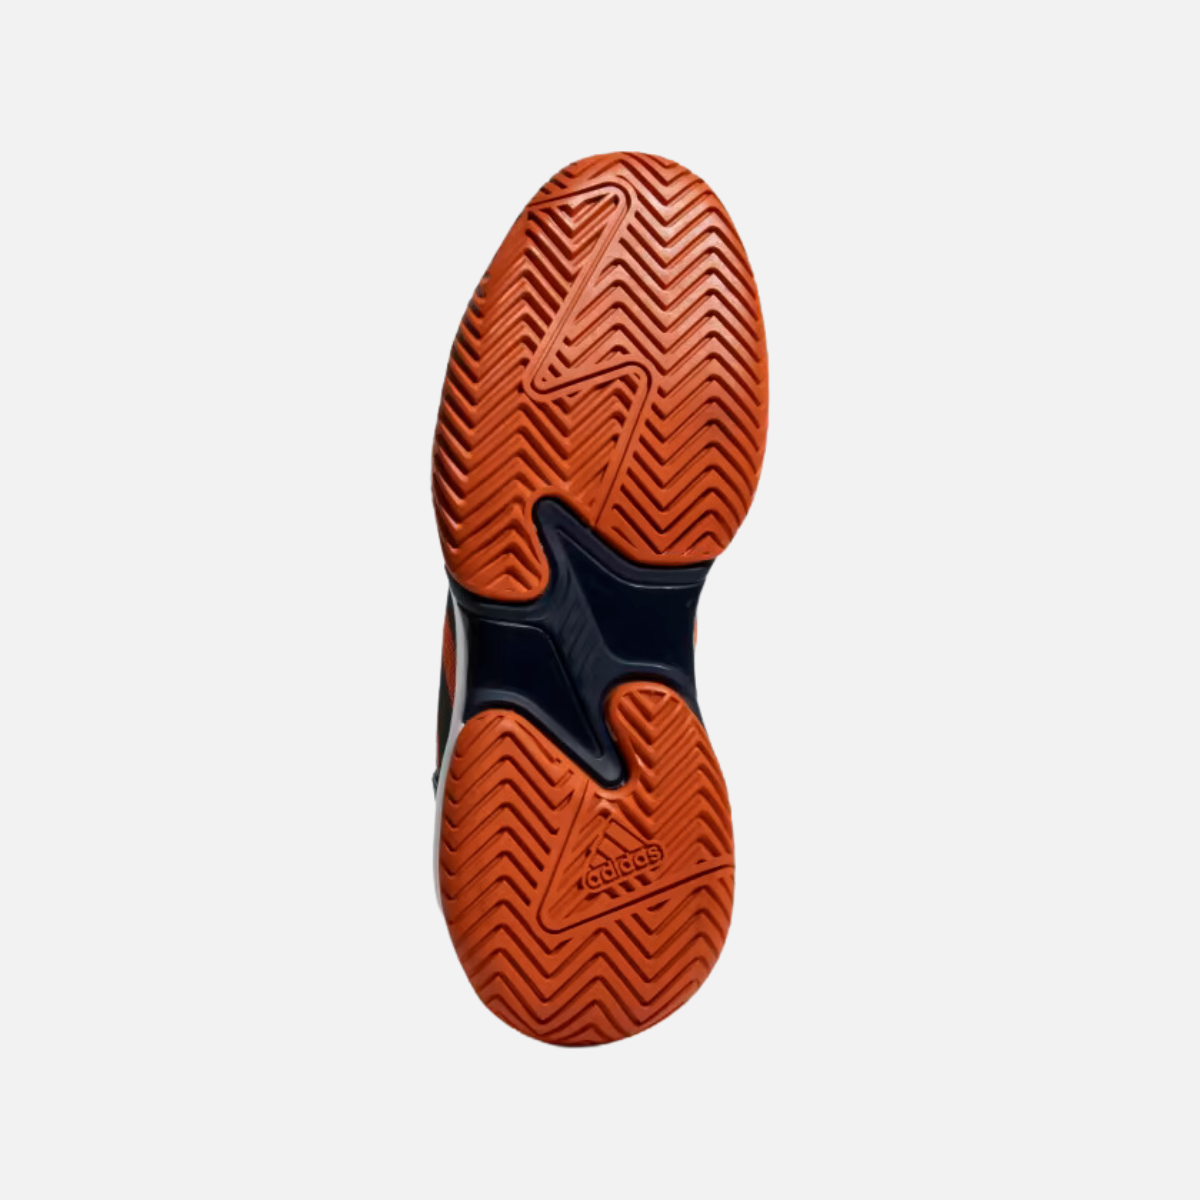 Adidas Tennis Top V2 Men's Tennis Shoes -Preloved Red/Collegiate Navy